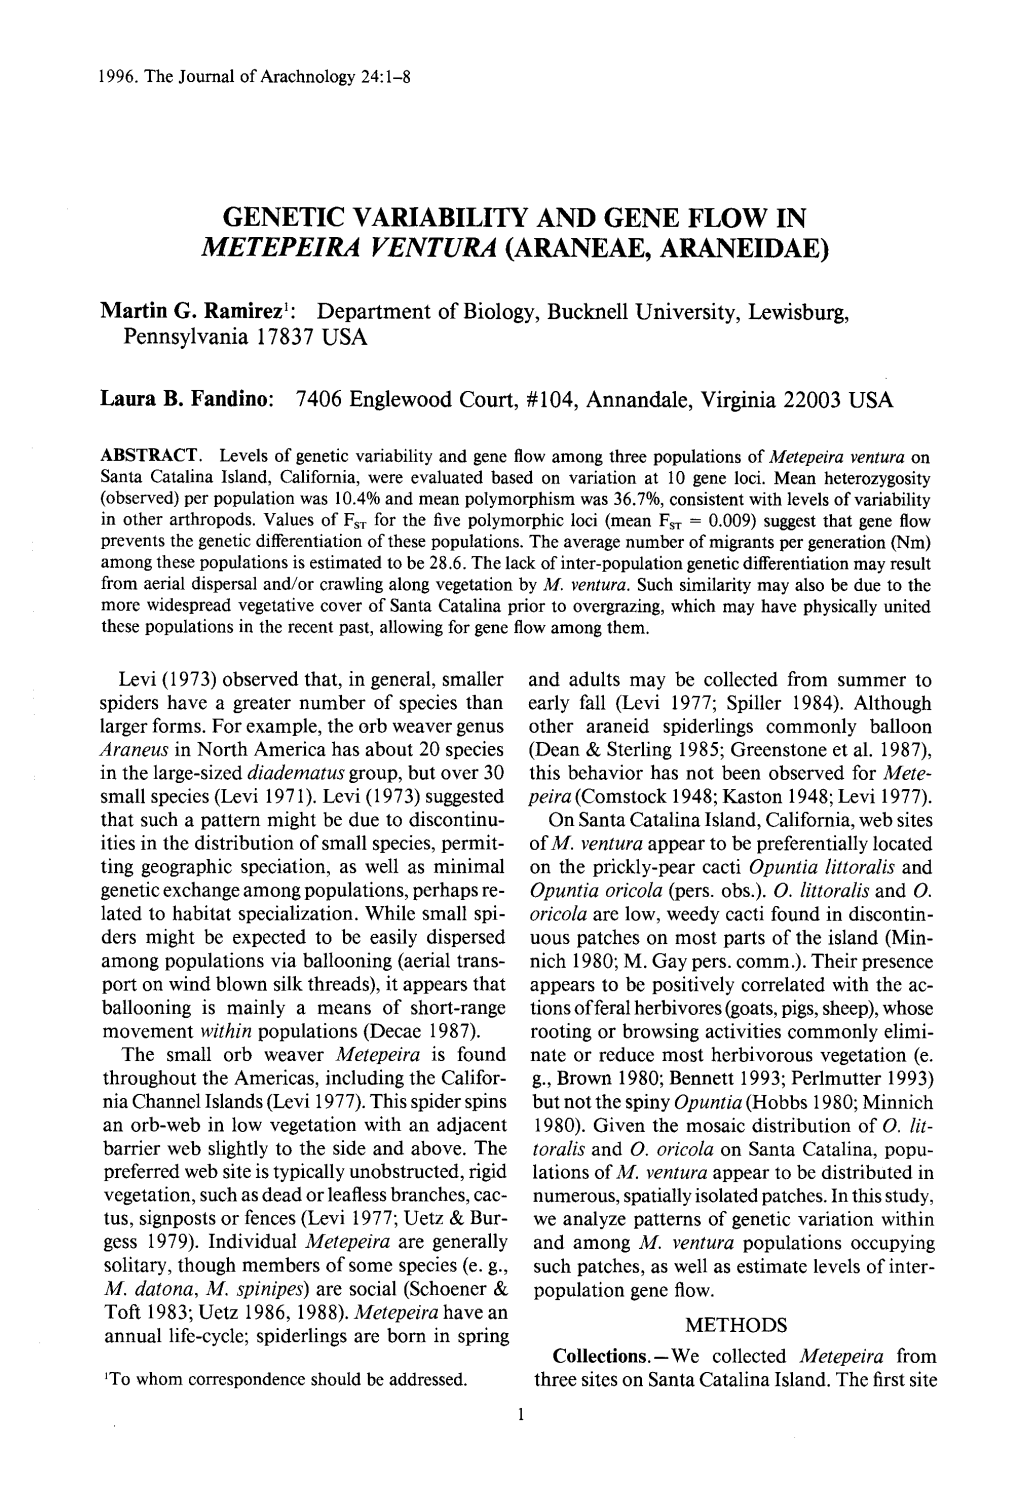 Genetic Variability and Gene Flow I N Metepeira Ventura (Araneae, Araneidae)